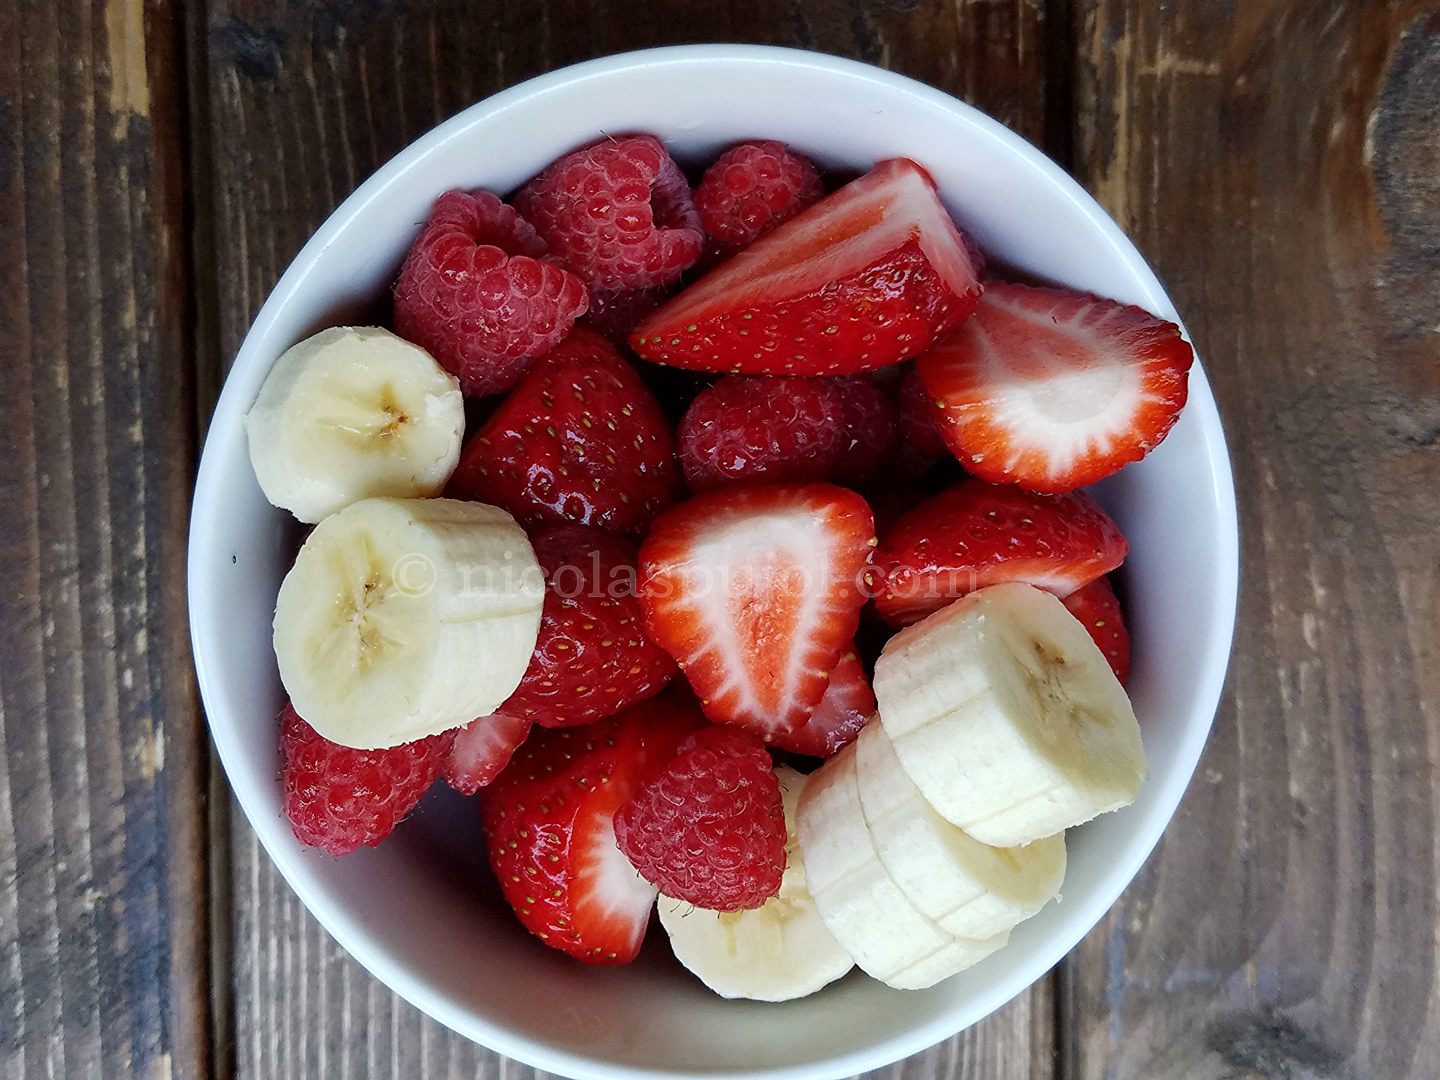 Strawberry raspberry banana fruit salad